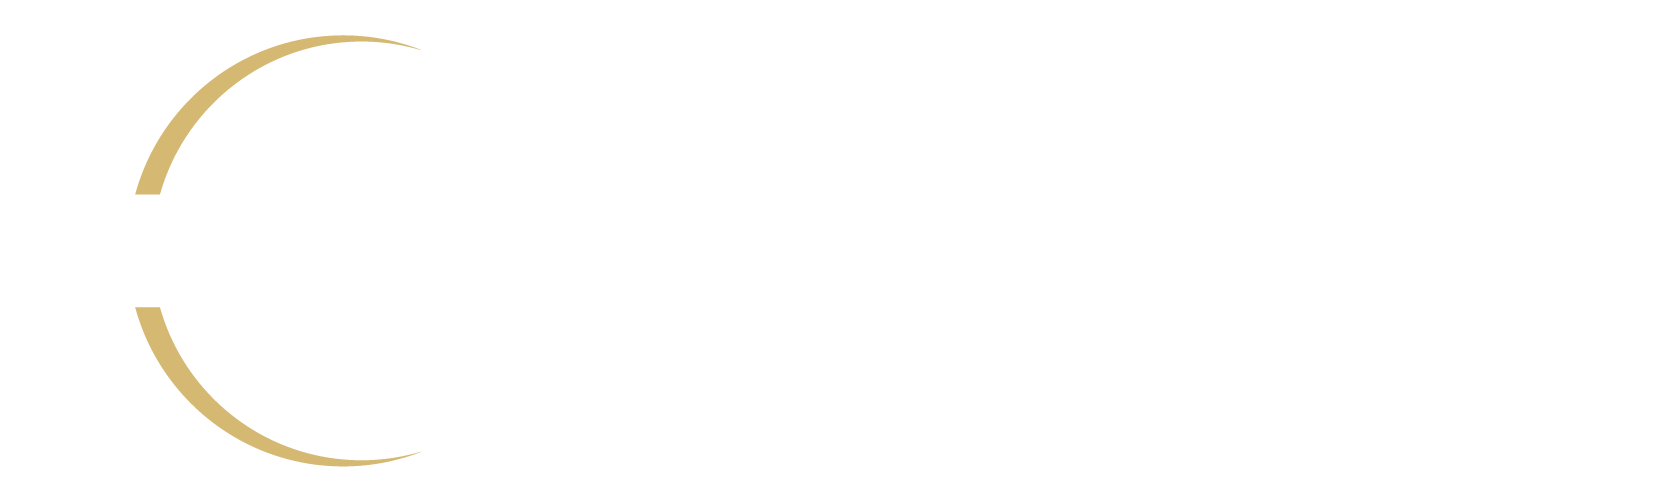 KLU Wealth